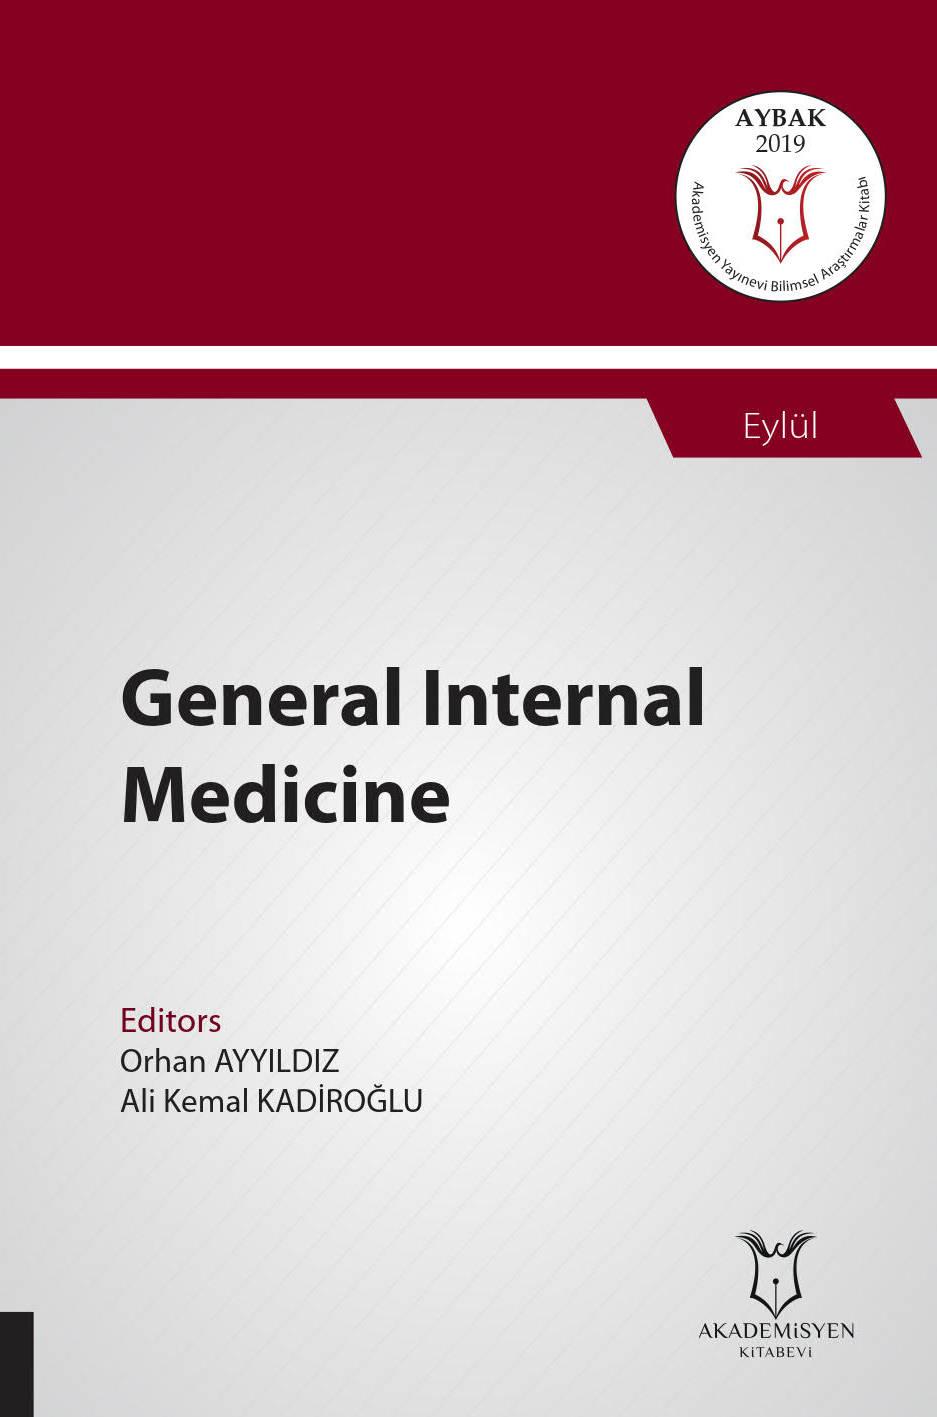 General Internal Medicine ( AYBAK 2019 Eylül )